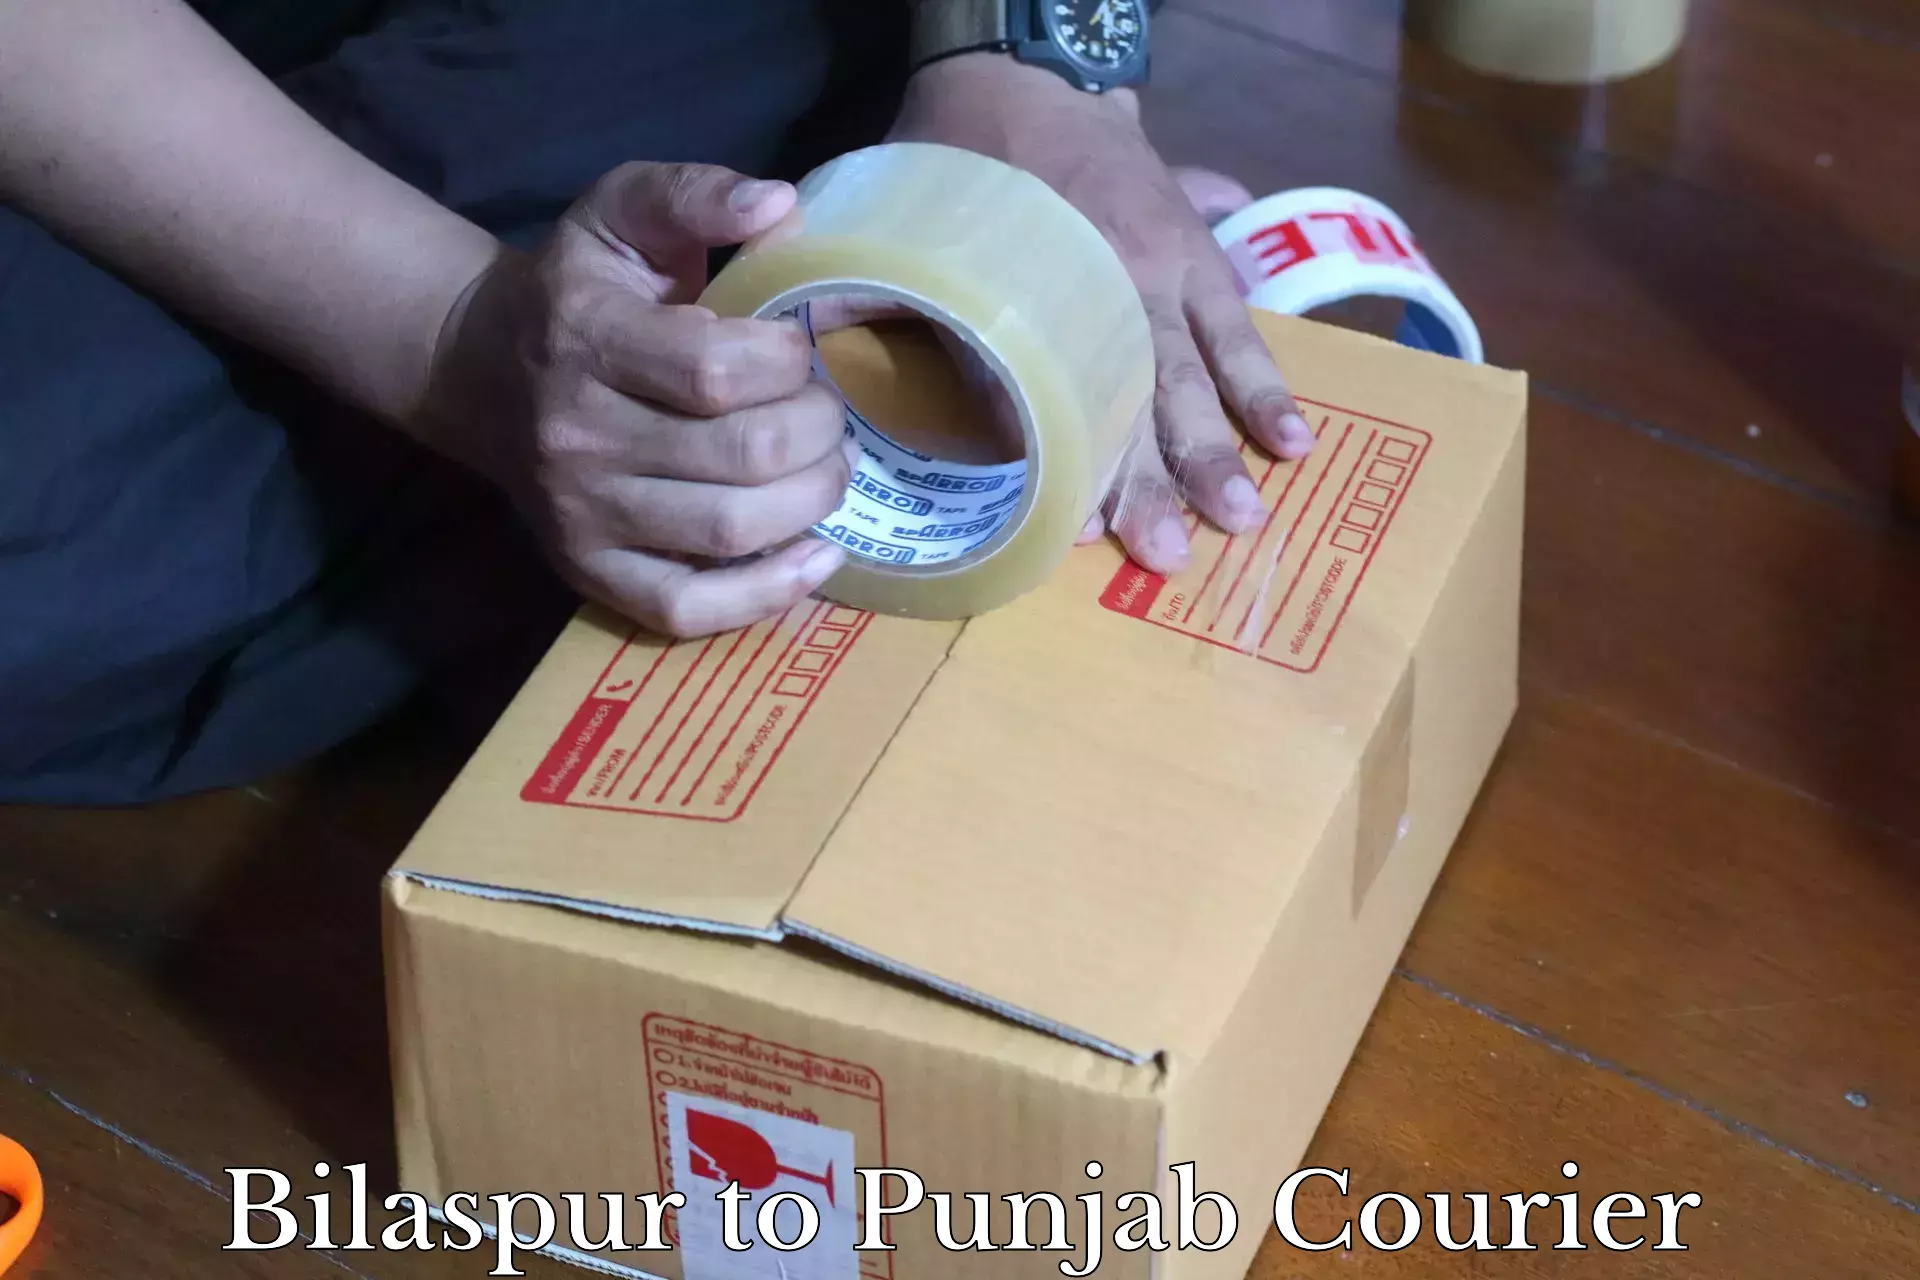 Local delivery service Bilaspur to Gurdaspur